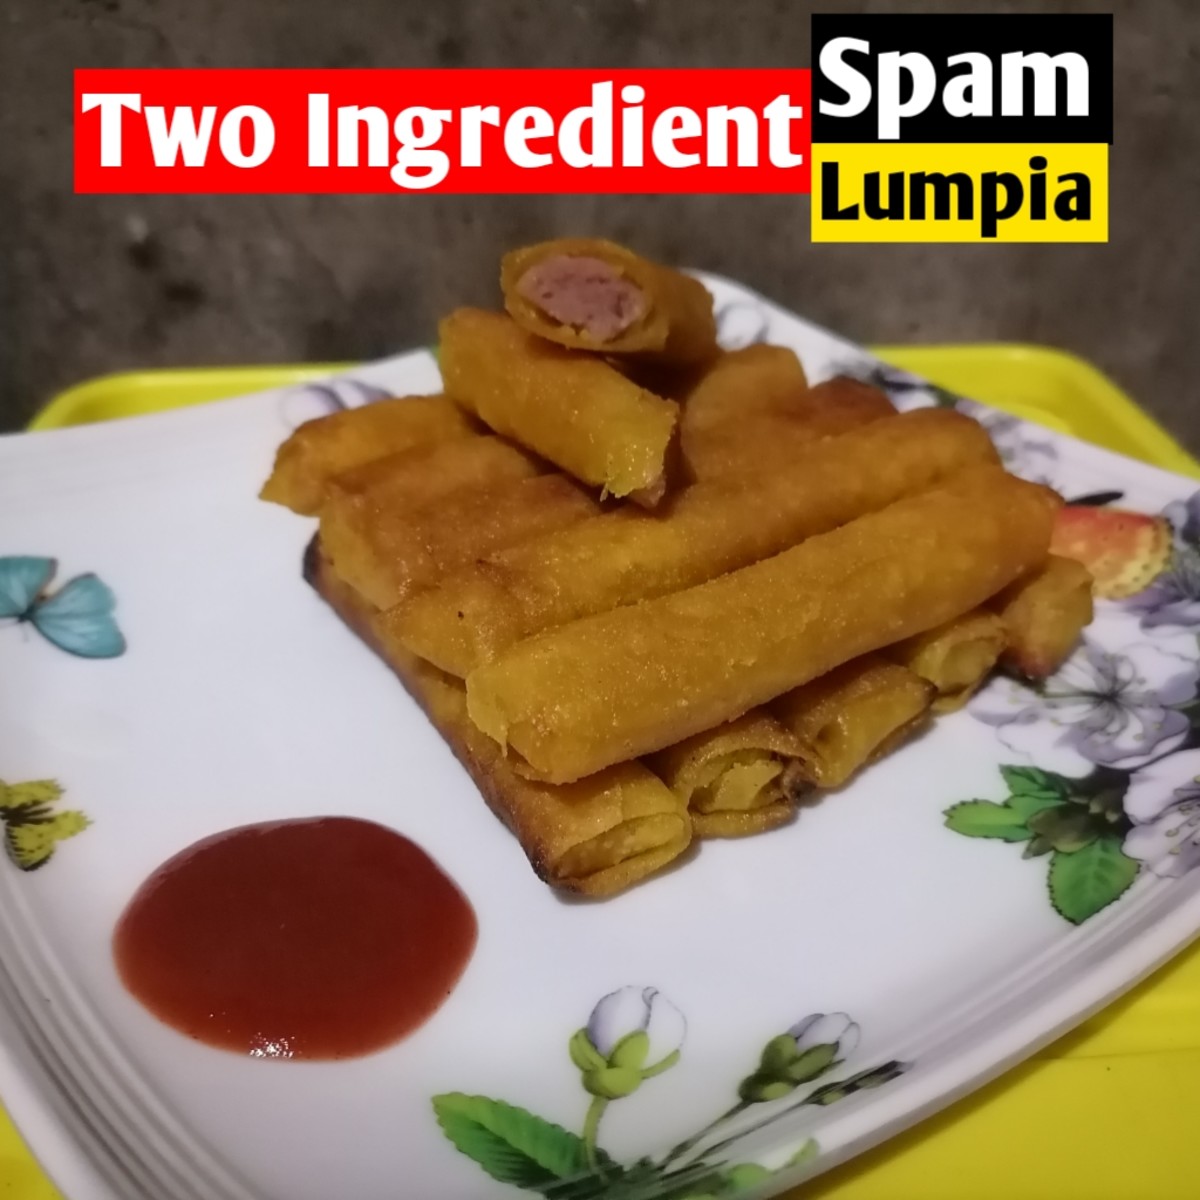 Two-Ingredient Spam Lumpia Recipe